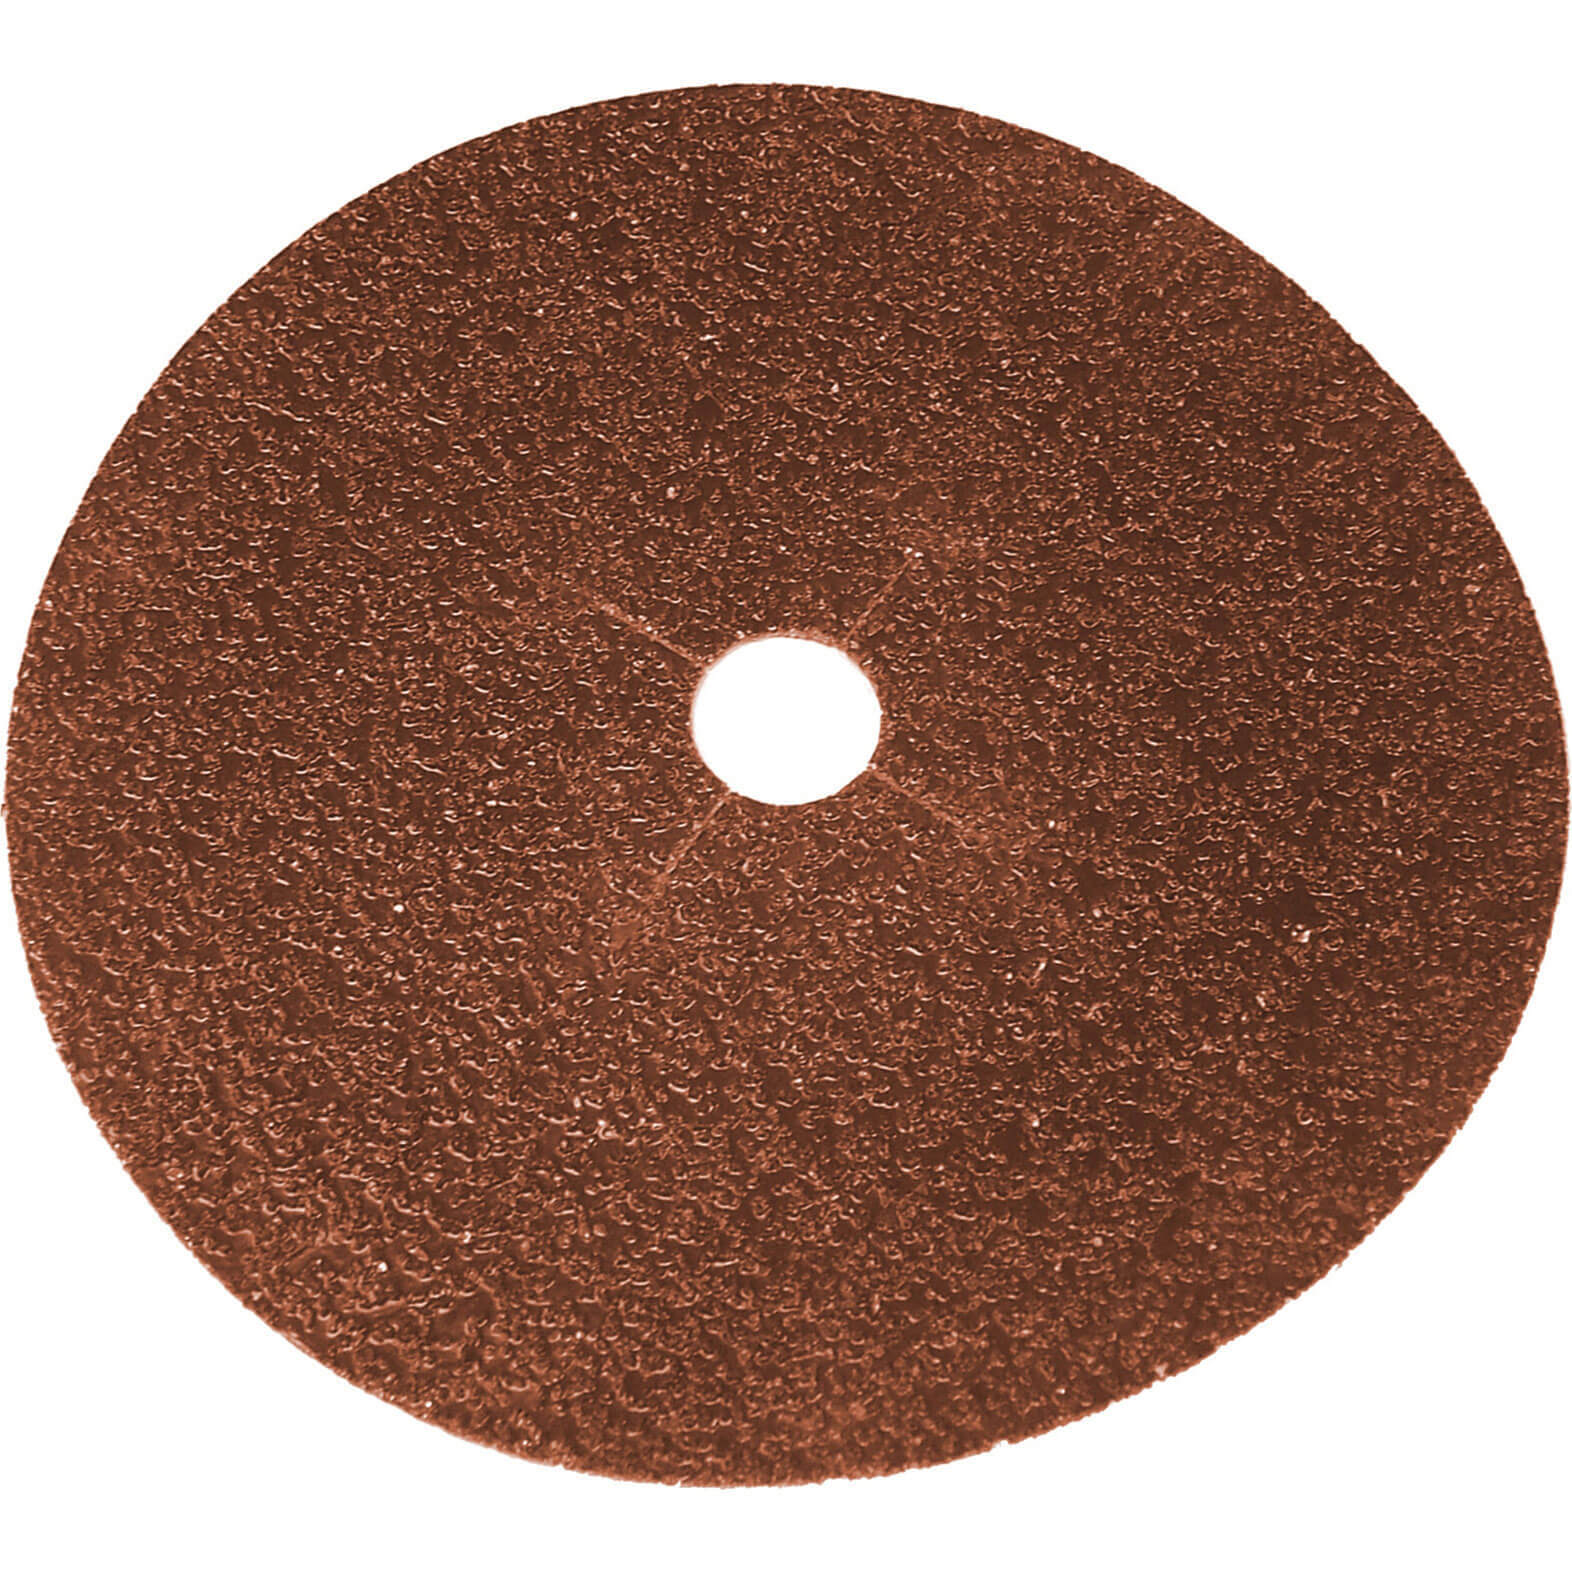 Image of Faithfull Aluminium Oxide Sanding Discs 178mm 60g